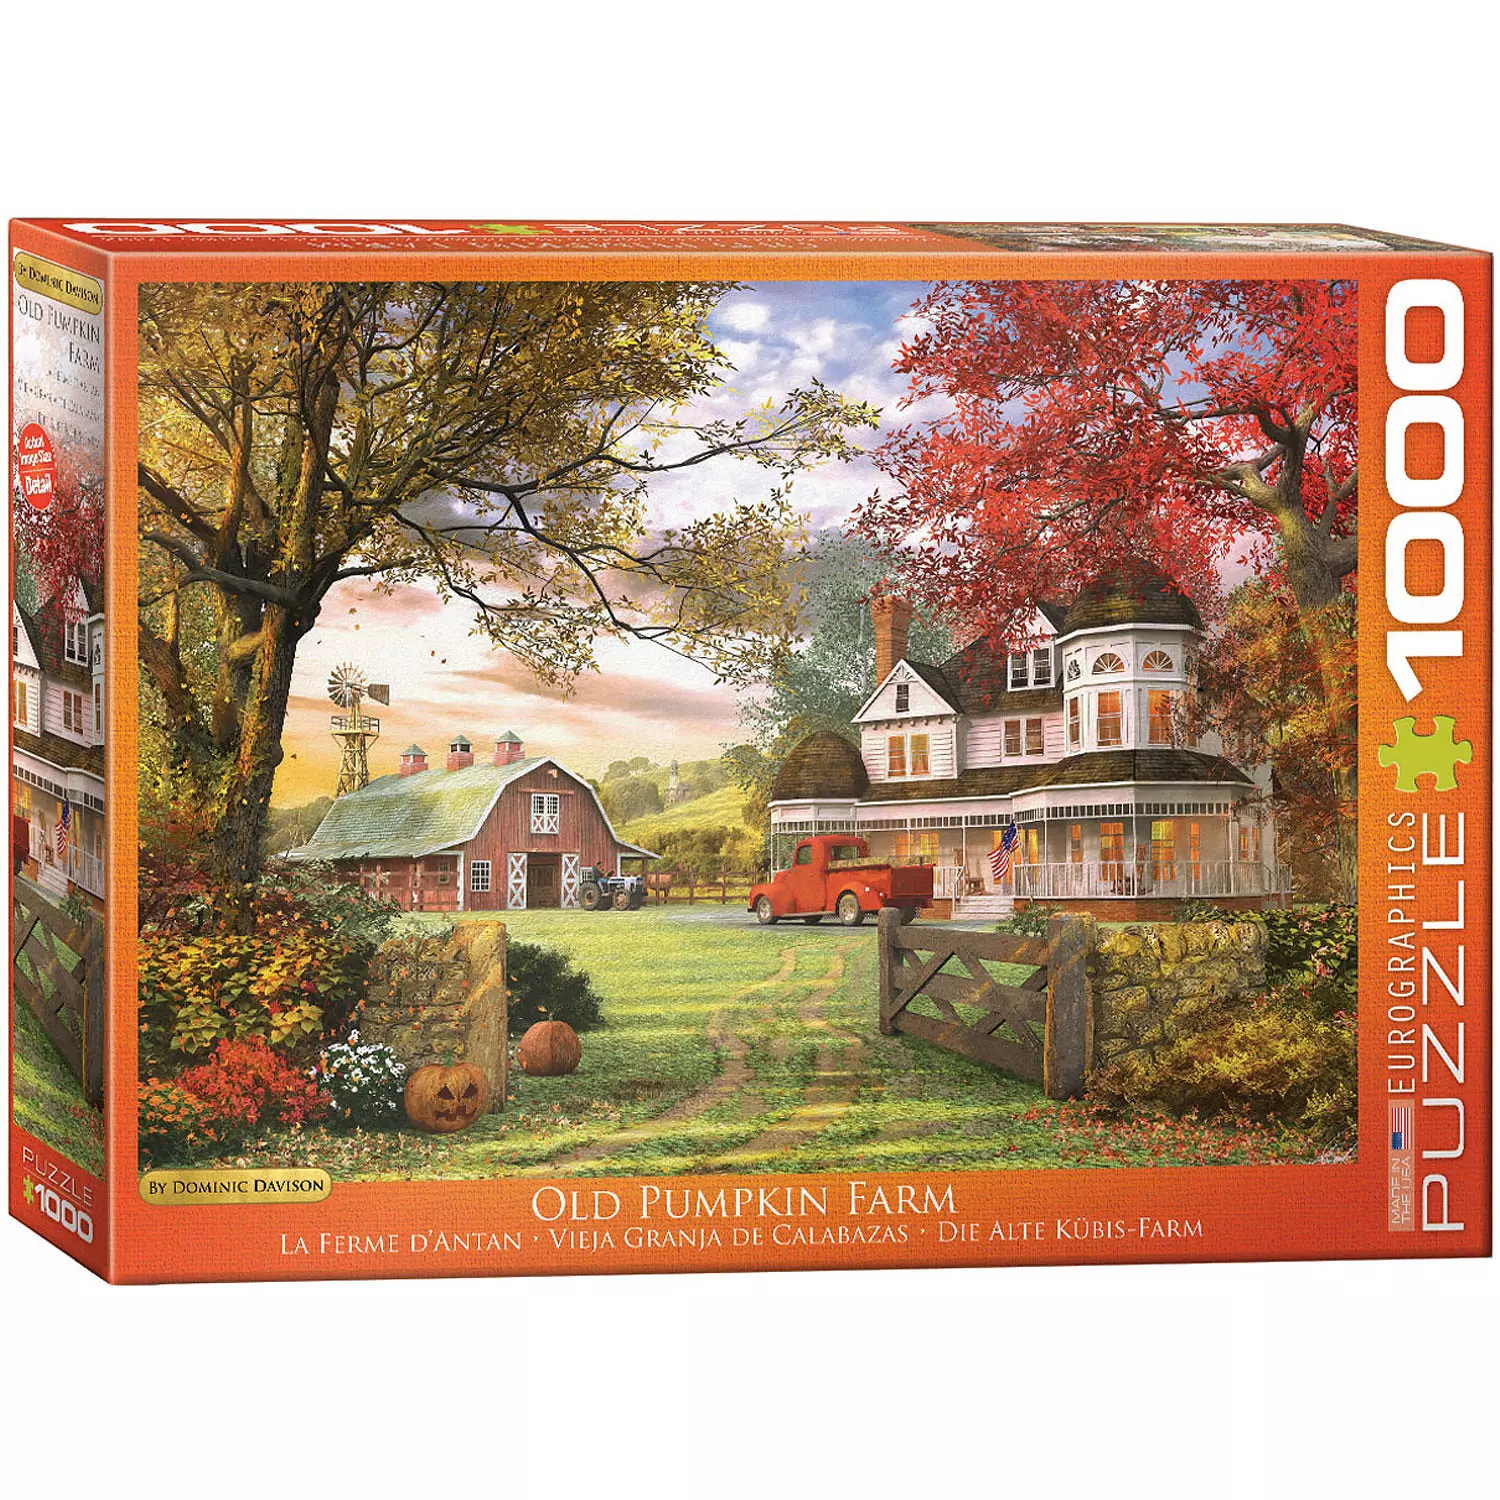 Eurographics - Puzzle, Dominic Davidson, Old pumpkin farm, 1000 pcs